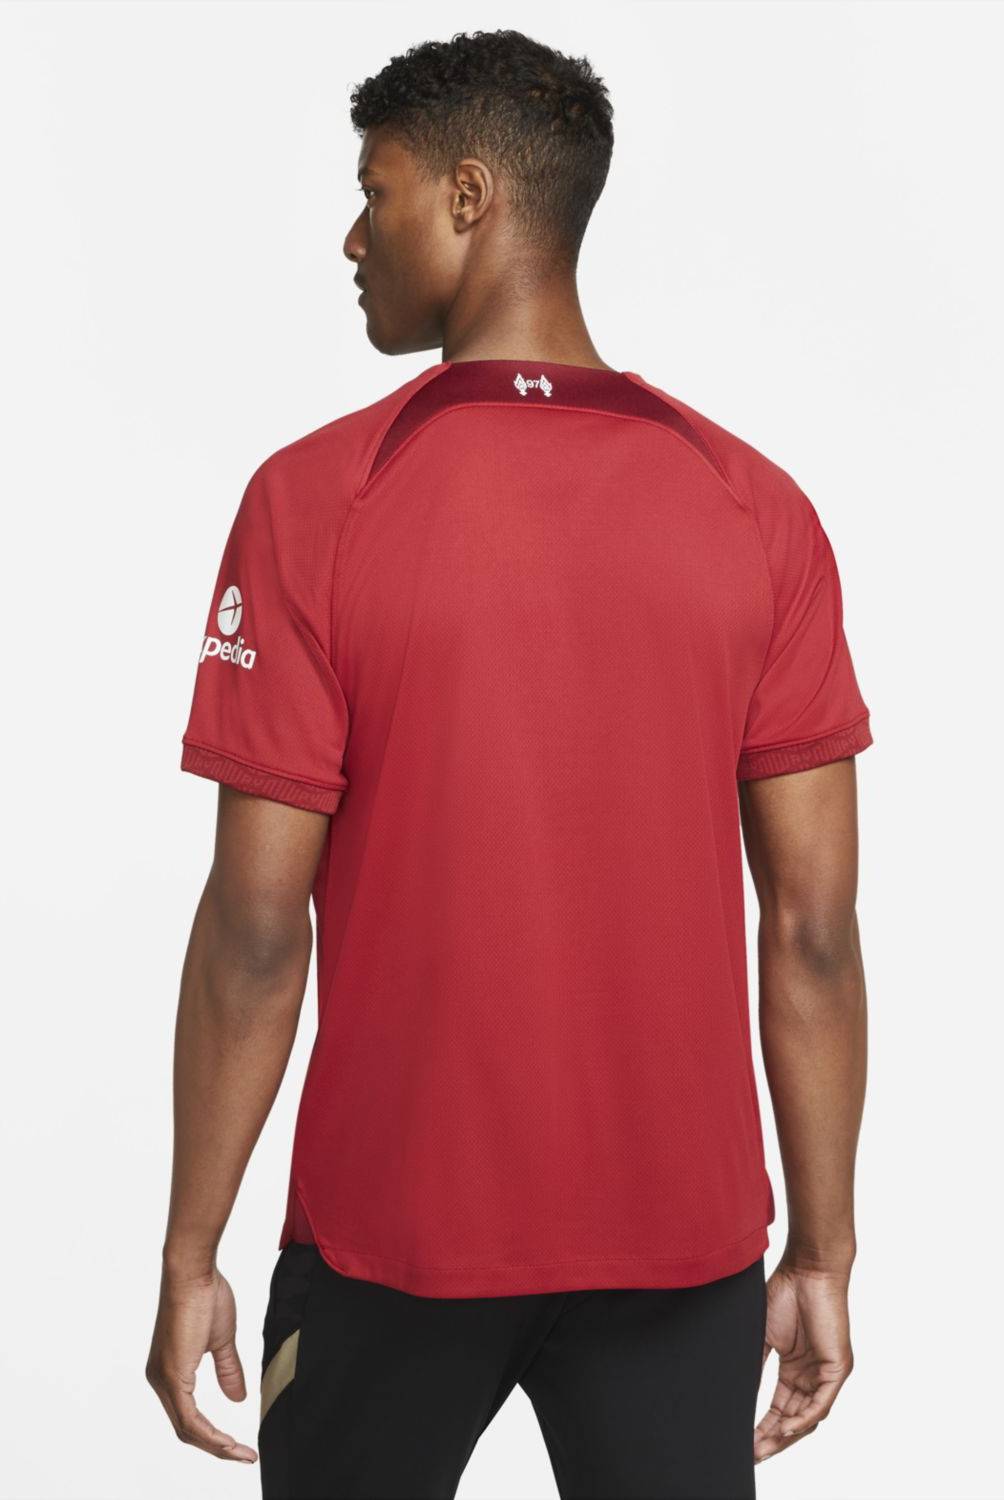 NIKE - Camiseta De Fútbol Liverpool Local Hombre Nike